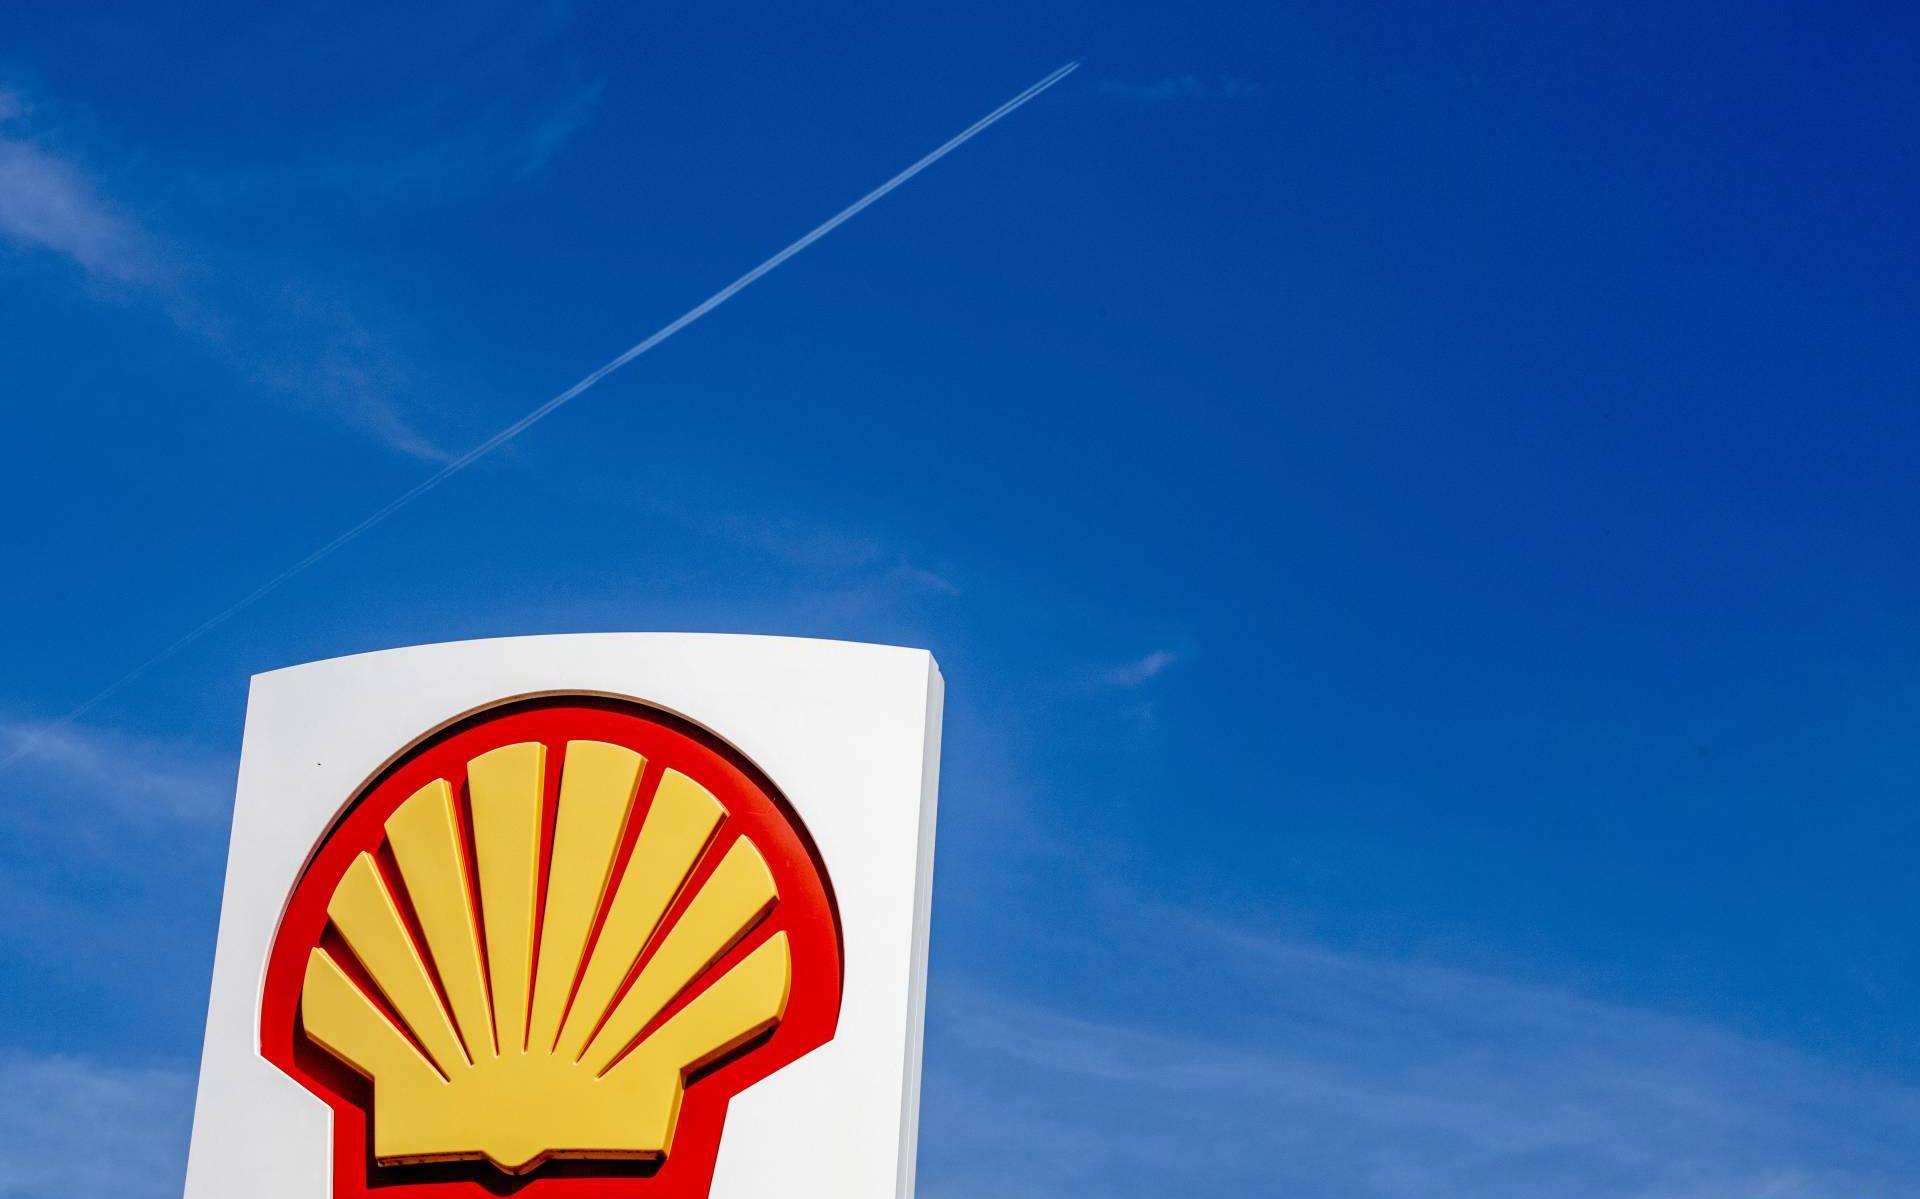 Shell weer op vingers getikt om misleidende groene claims